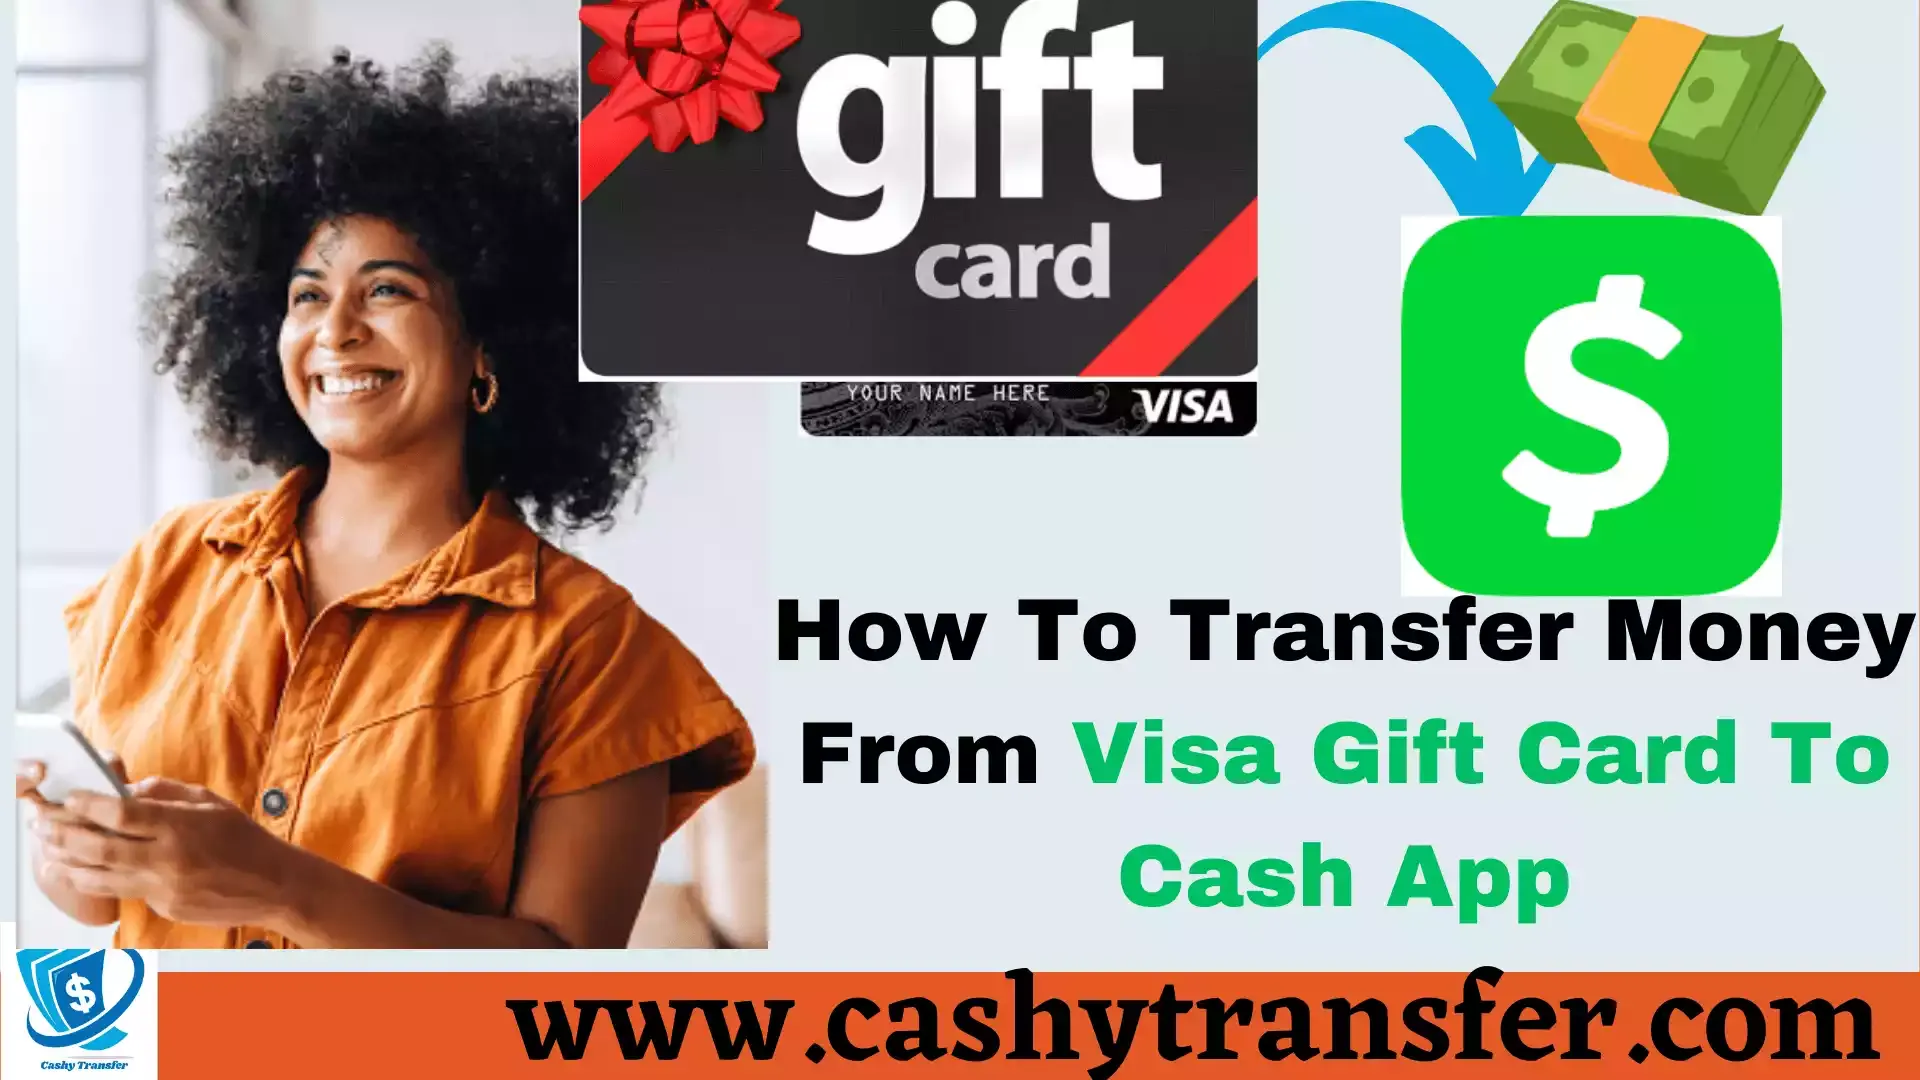 Transfer Money From Visa Gift Card To Cash App